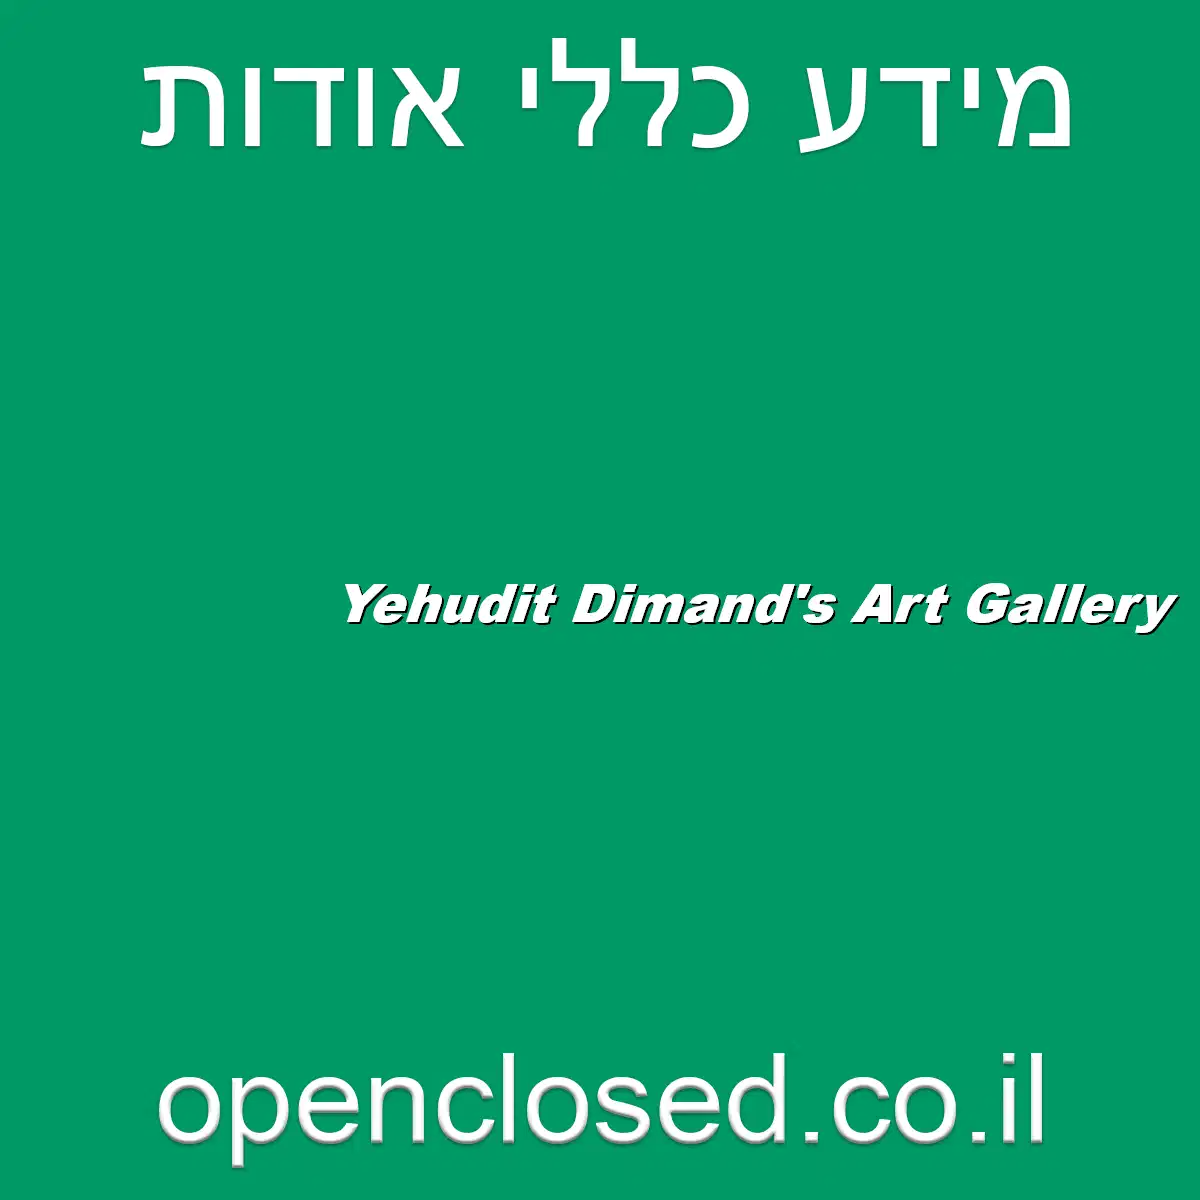 Yehudit Dimand’s Art Gallery